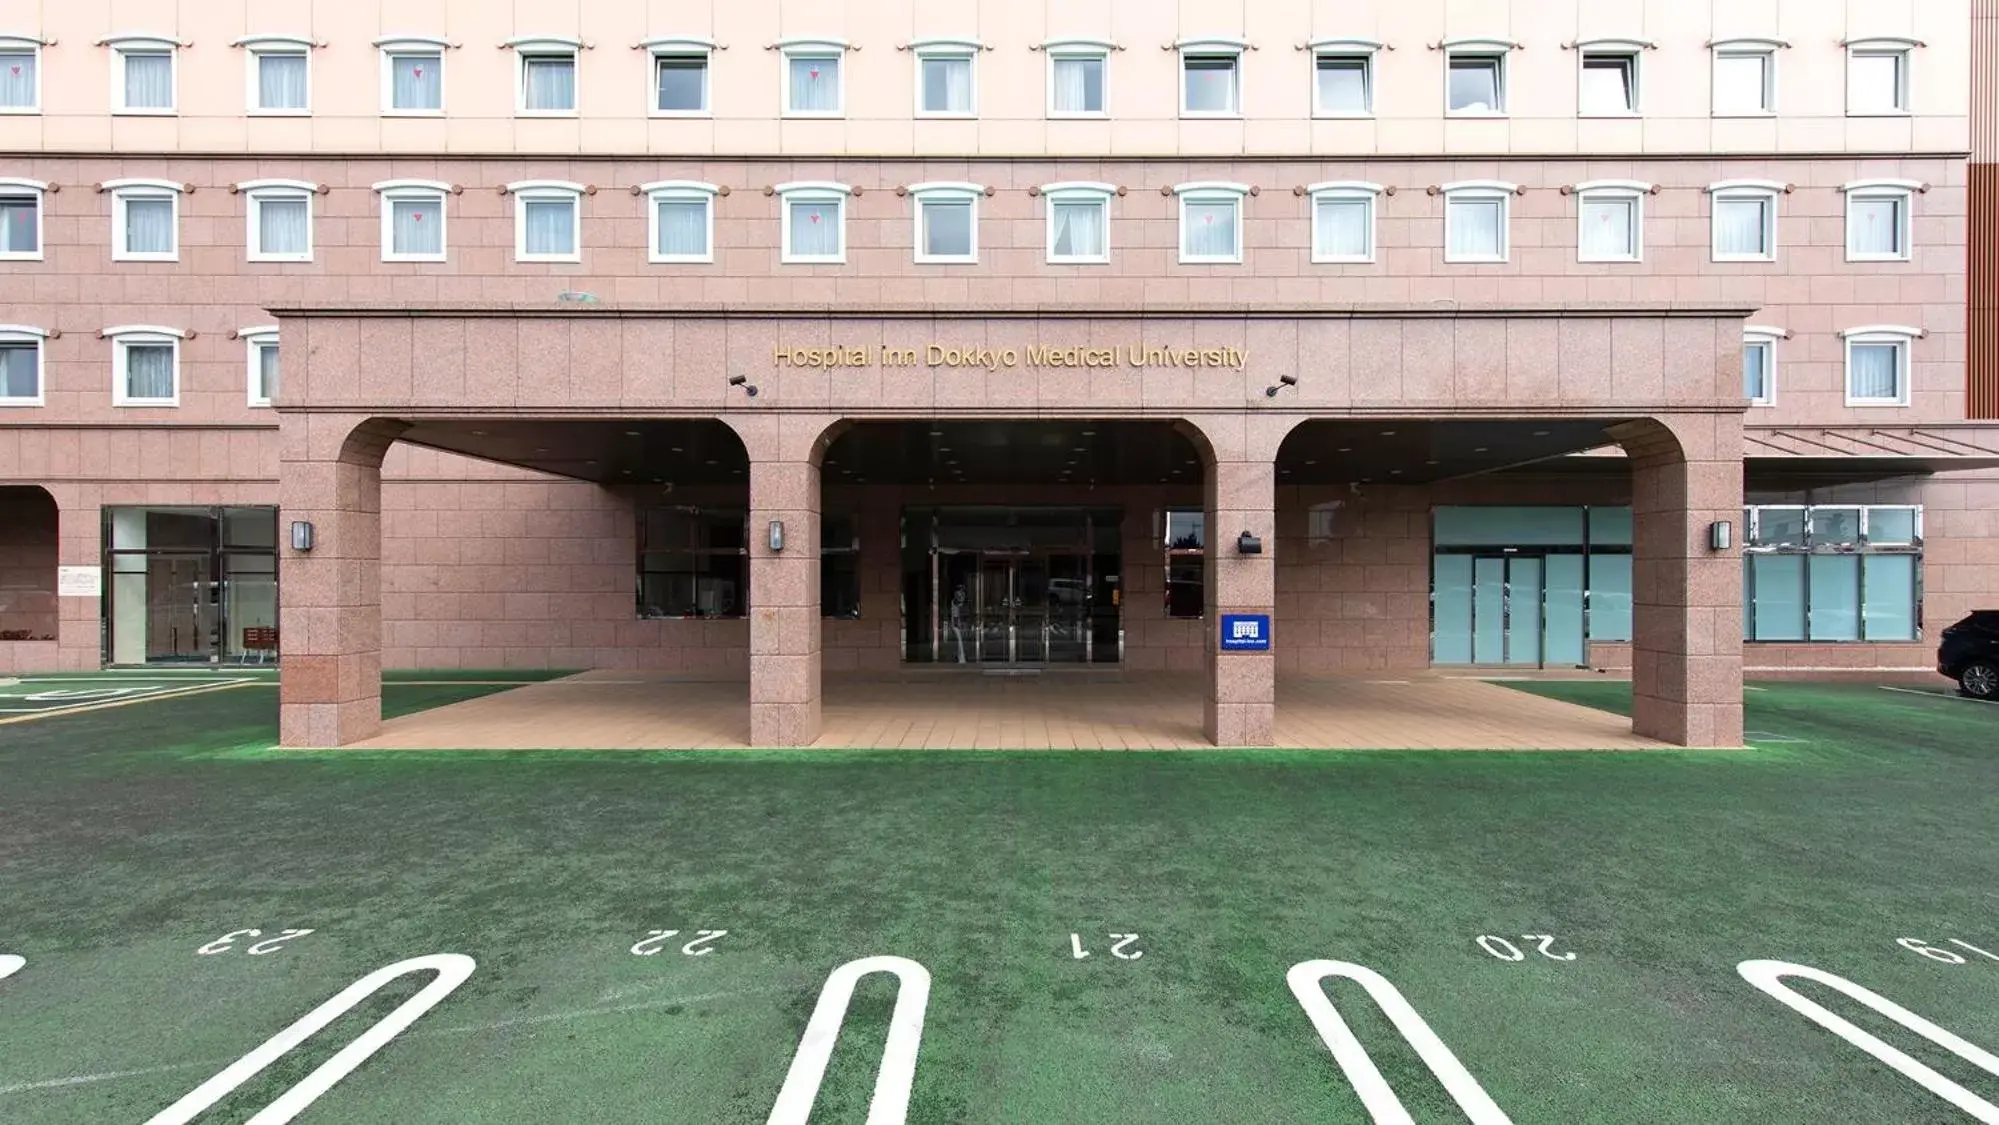 Facade/entrance in Toyoko Inn HOSPITAL INN Dokkyo Medical University